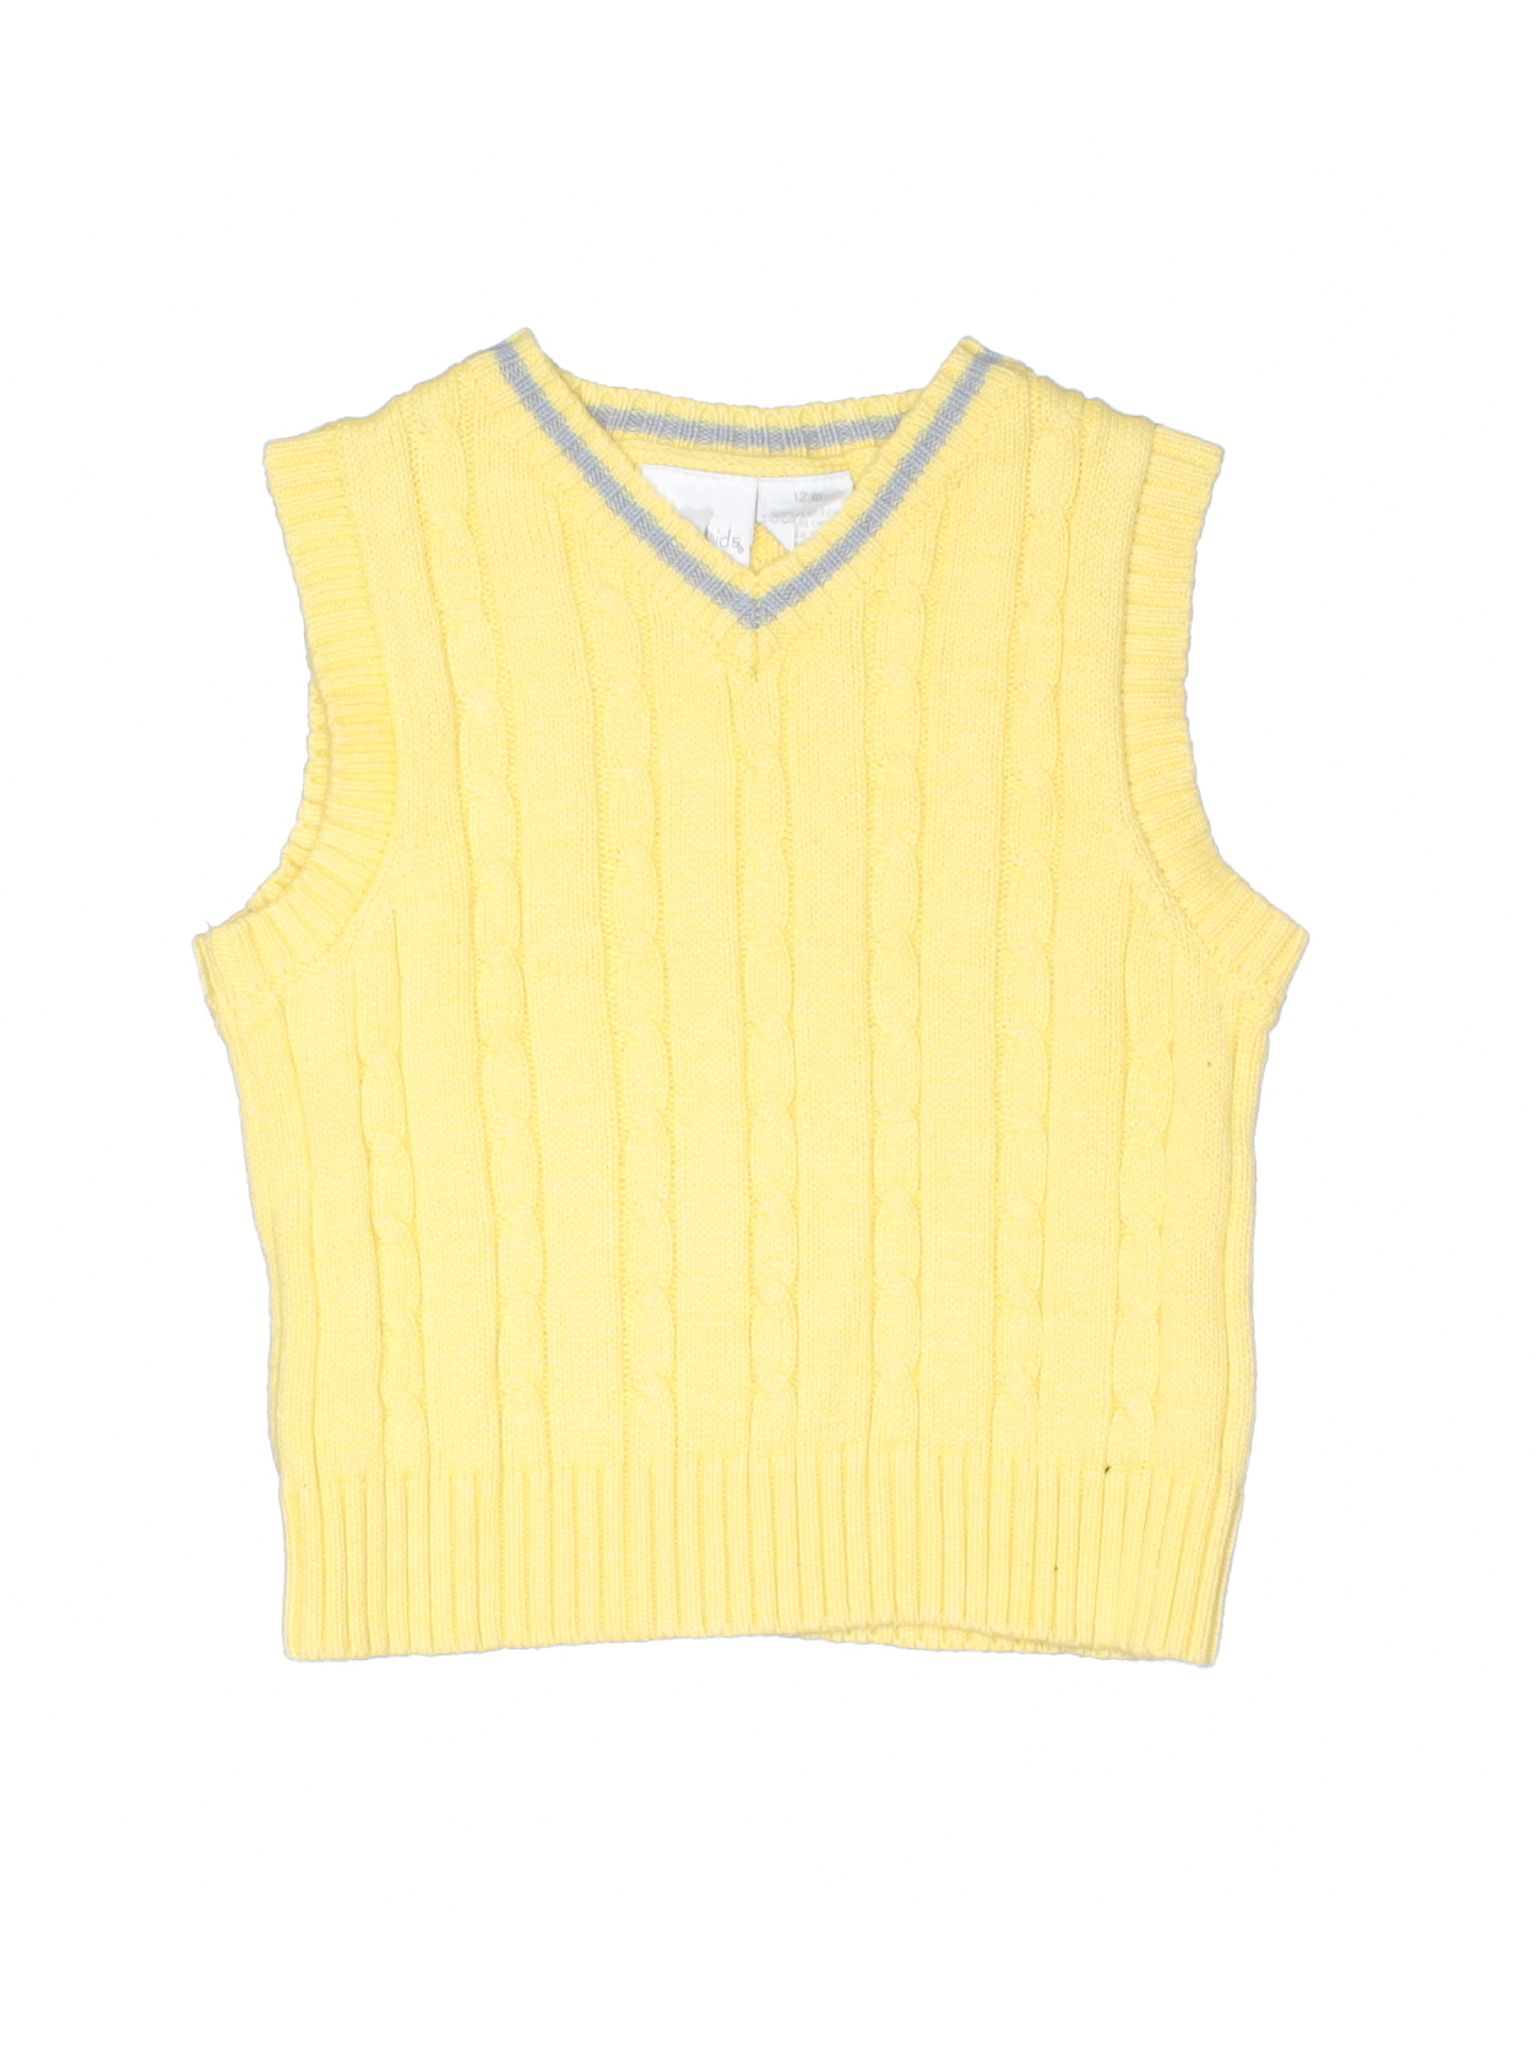 Koala Kids Sweater Vest Size 9-12 mo: Yellow Boys Tops - 33474010 | thredUP